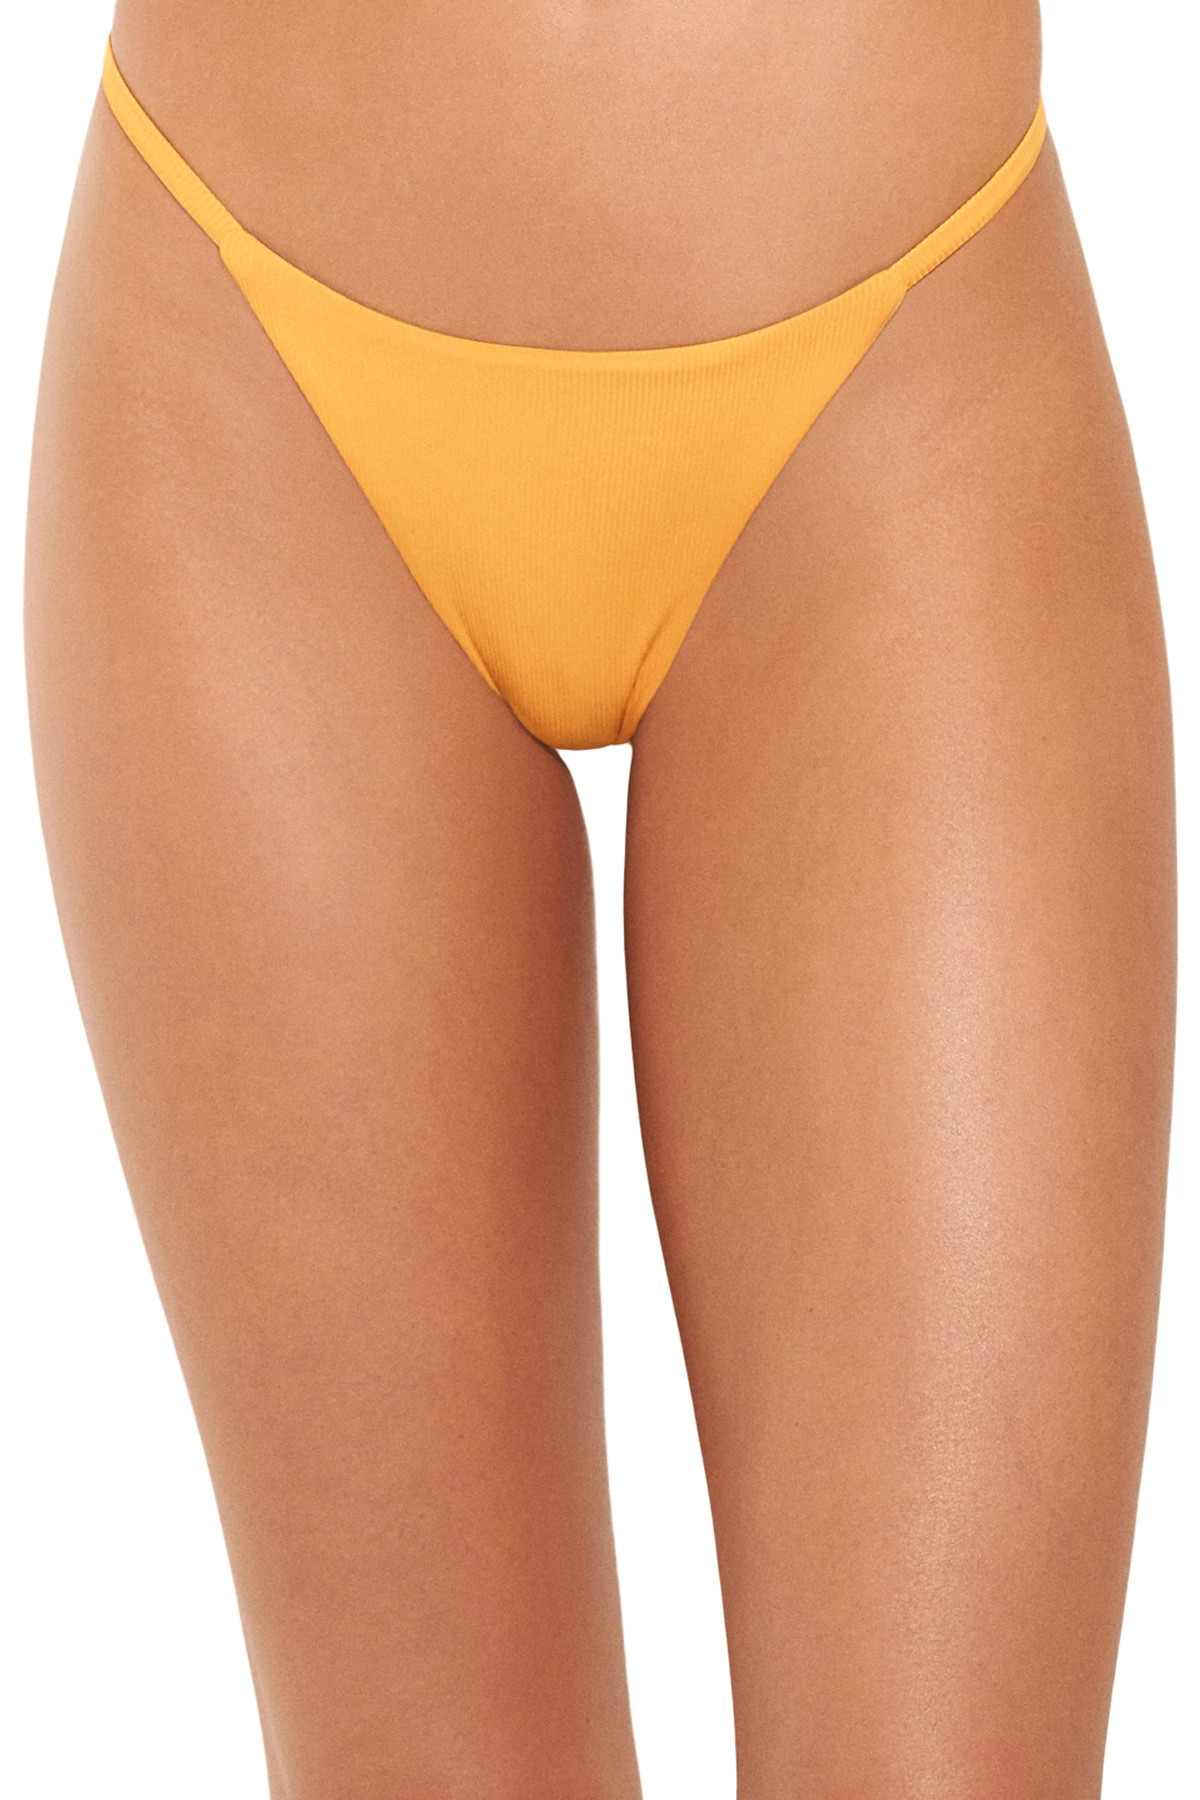 BLOSSOM Micro Mini Reversible Brazilian Bikini Bottom image number 2